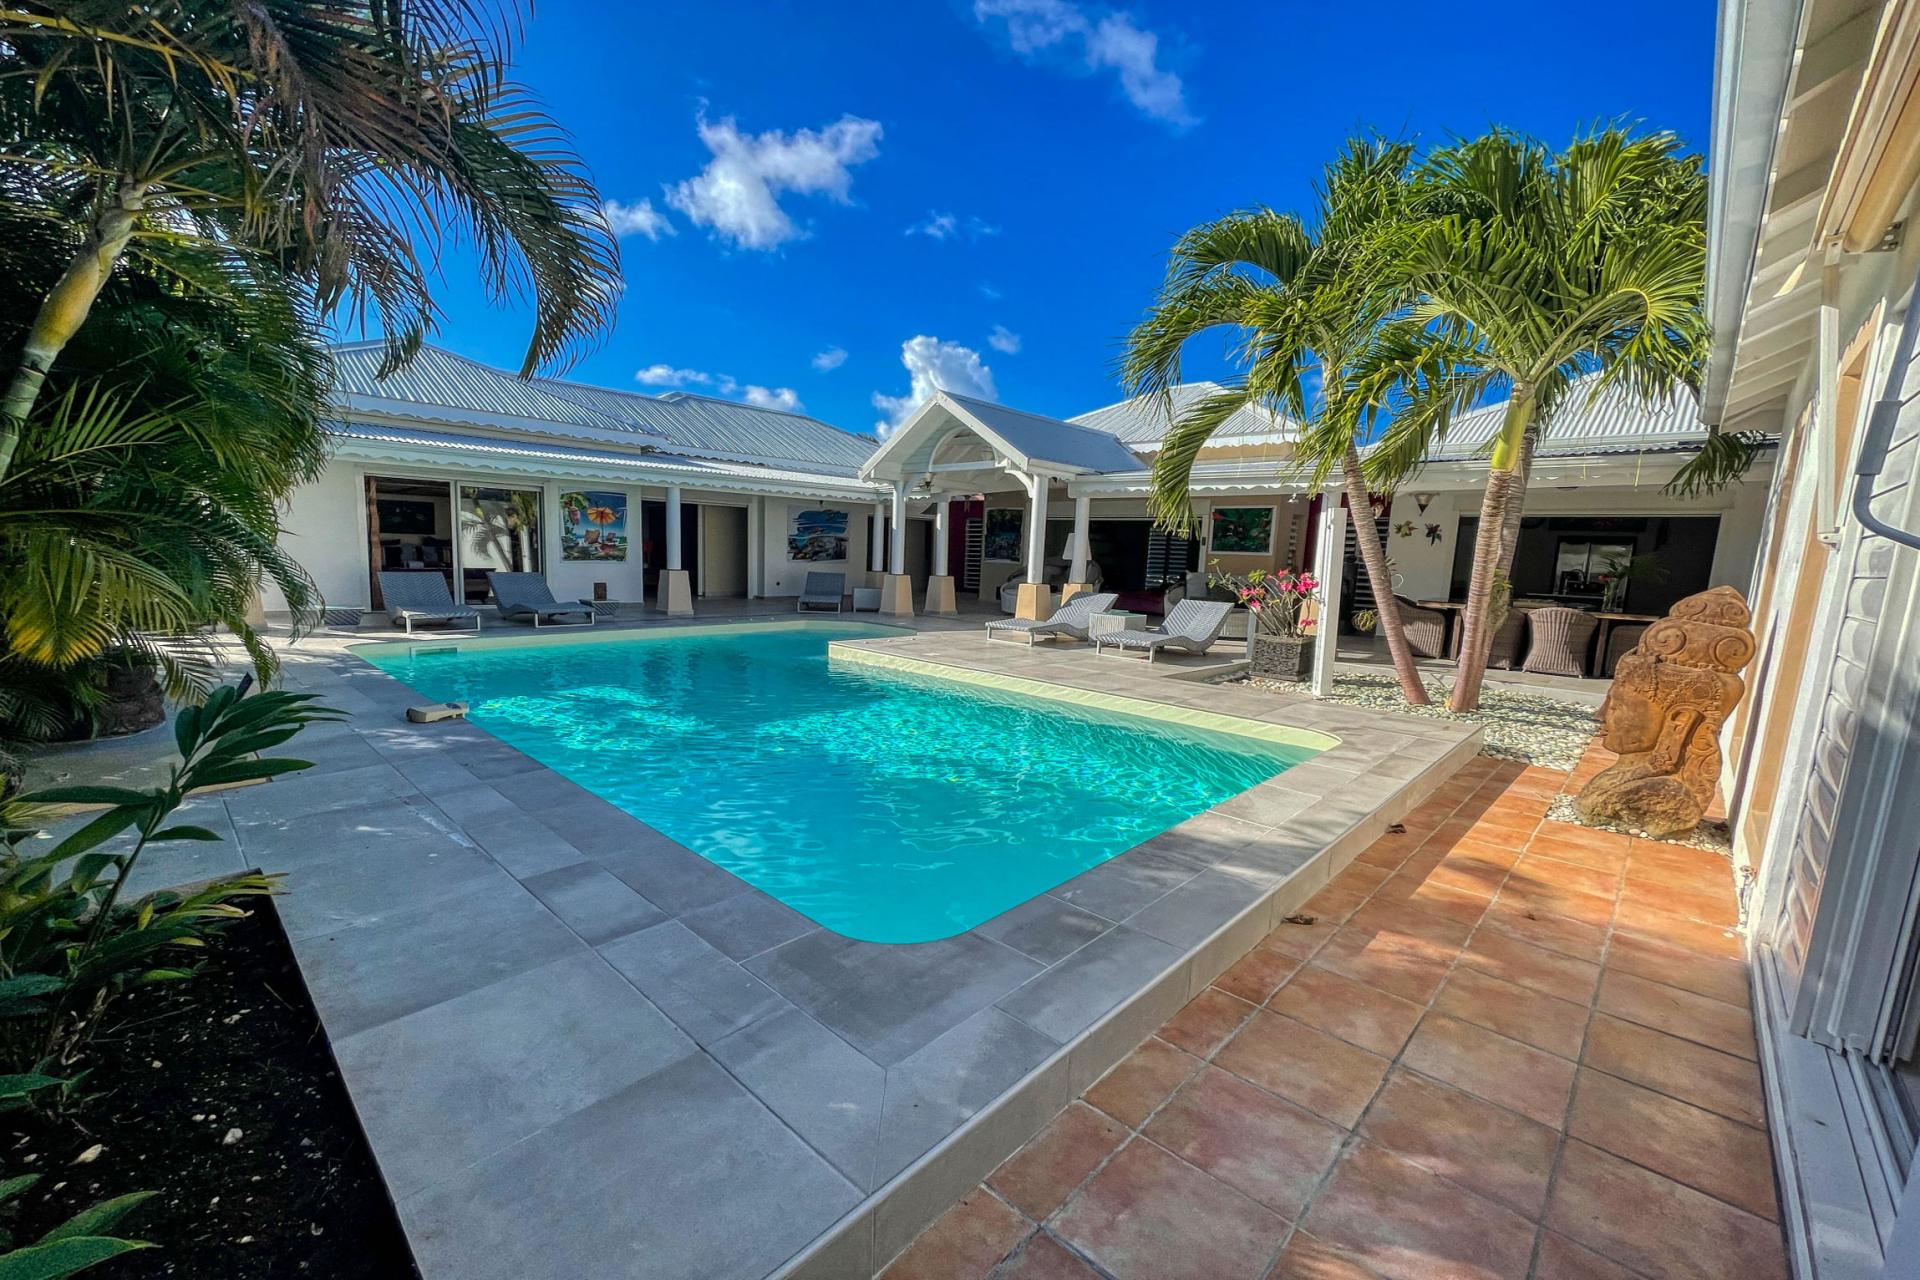 Luxury villa with swimming pool - pool